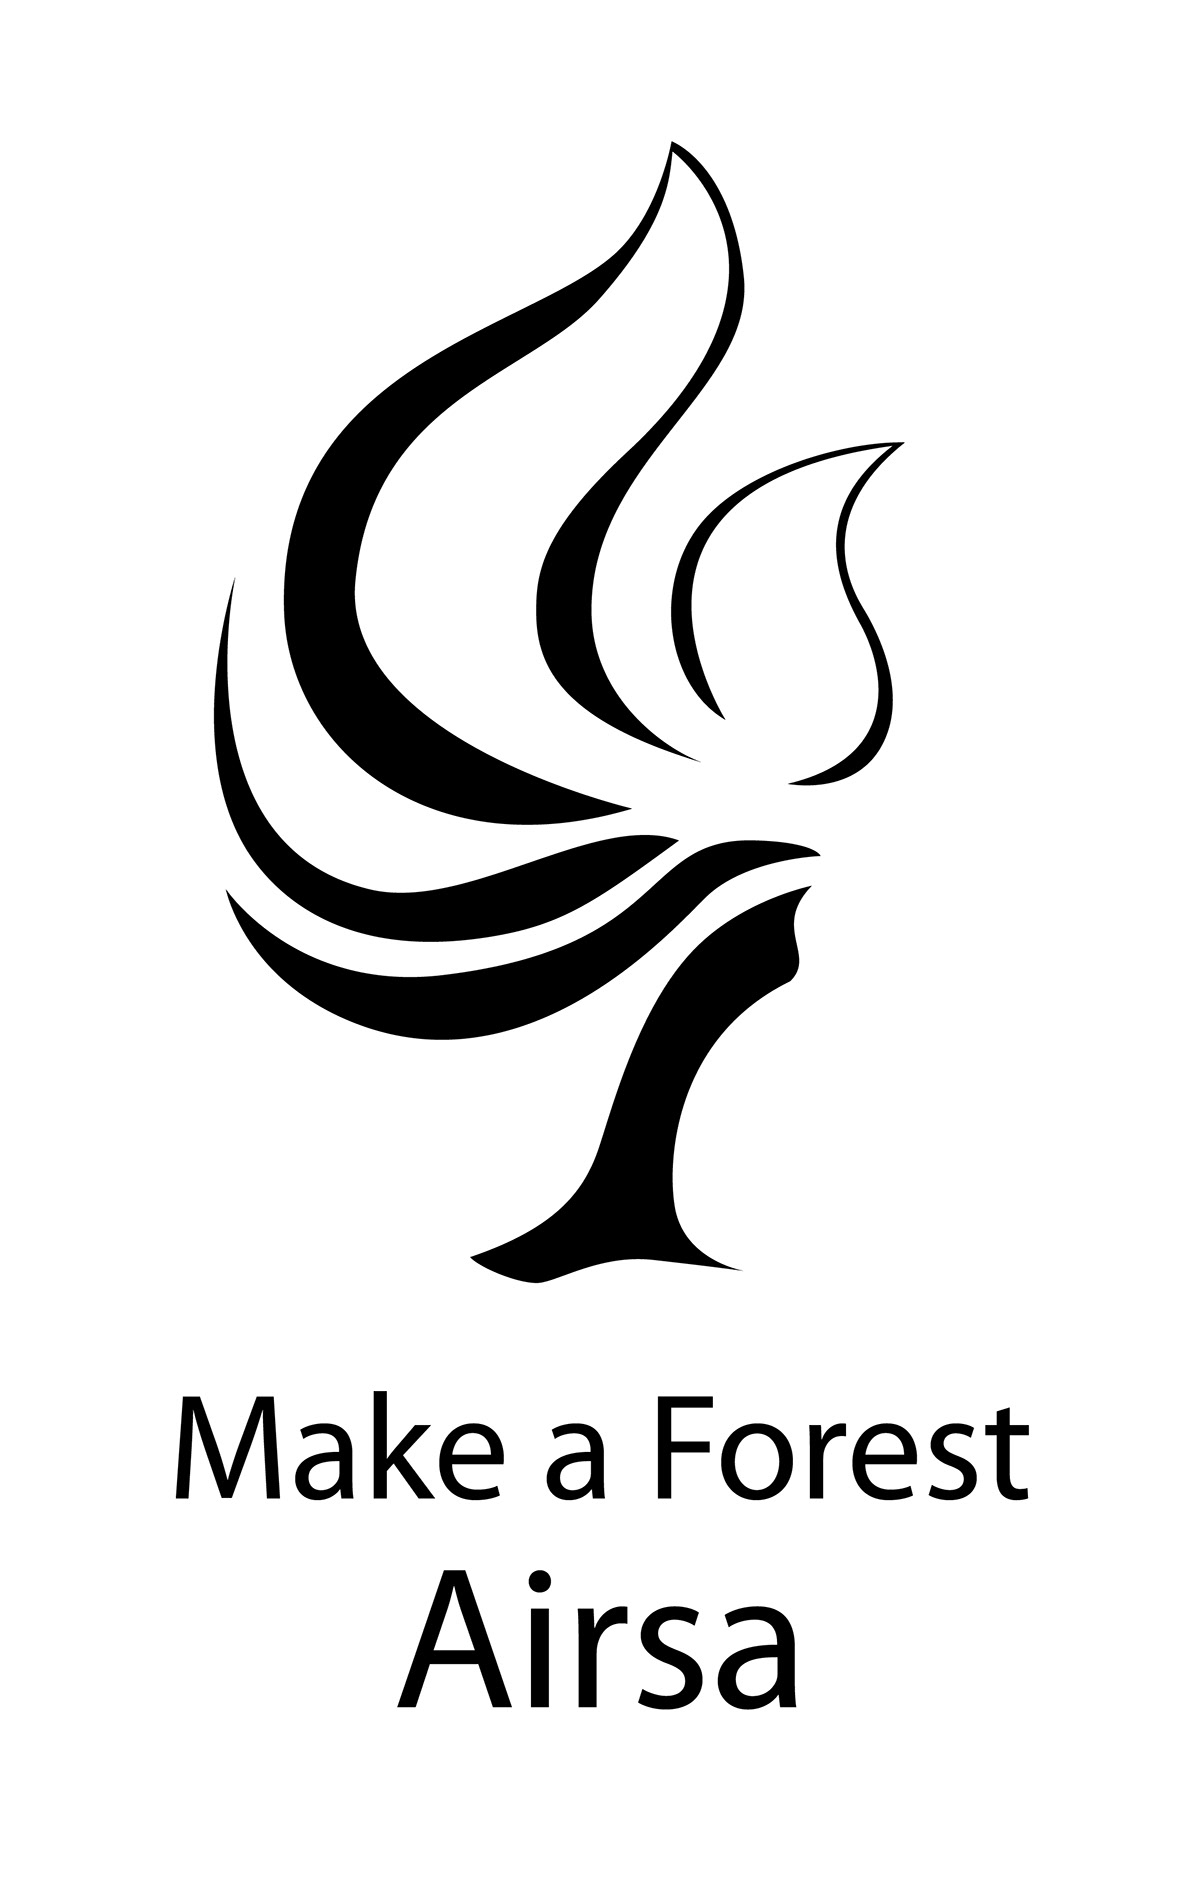 Make a Forest logo un United Nation